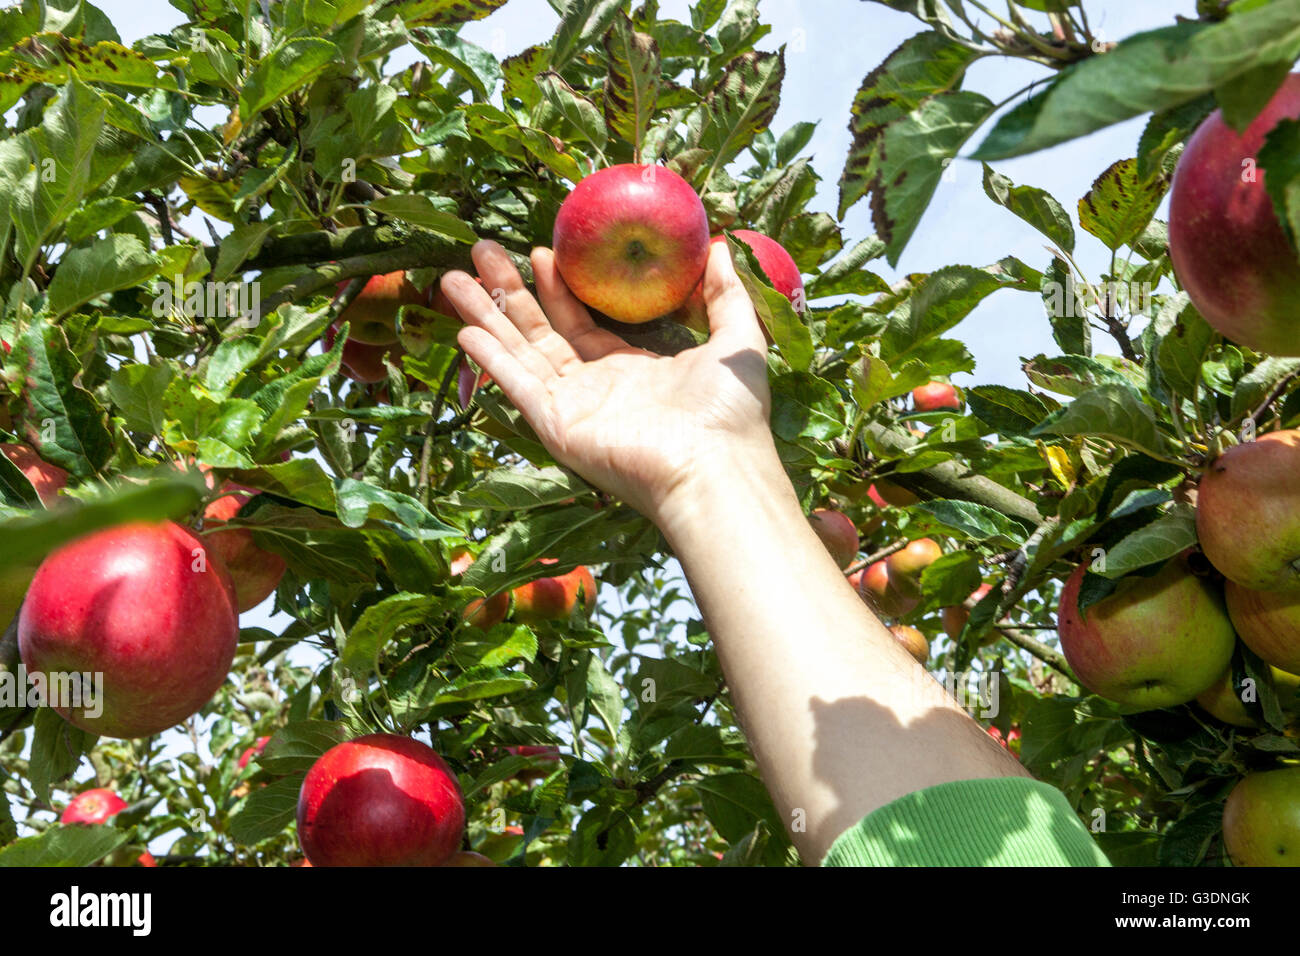 Picking apples harvesting fruits Stock Photo